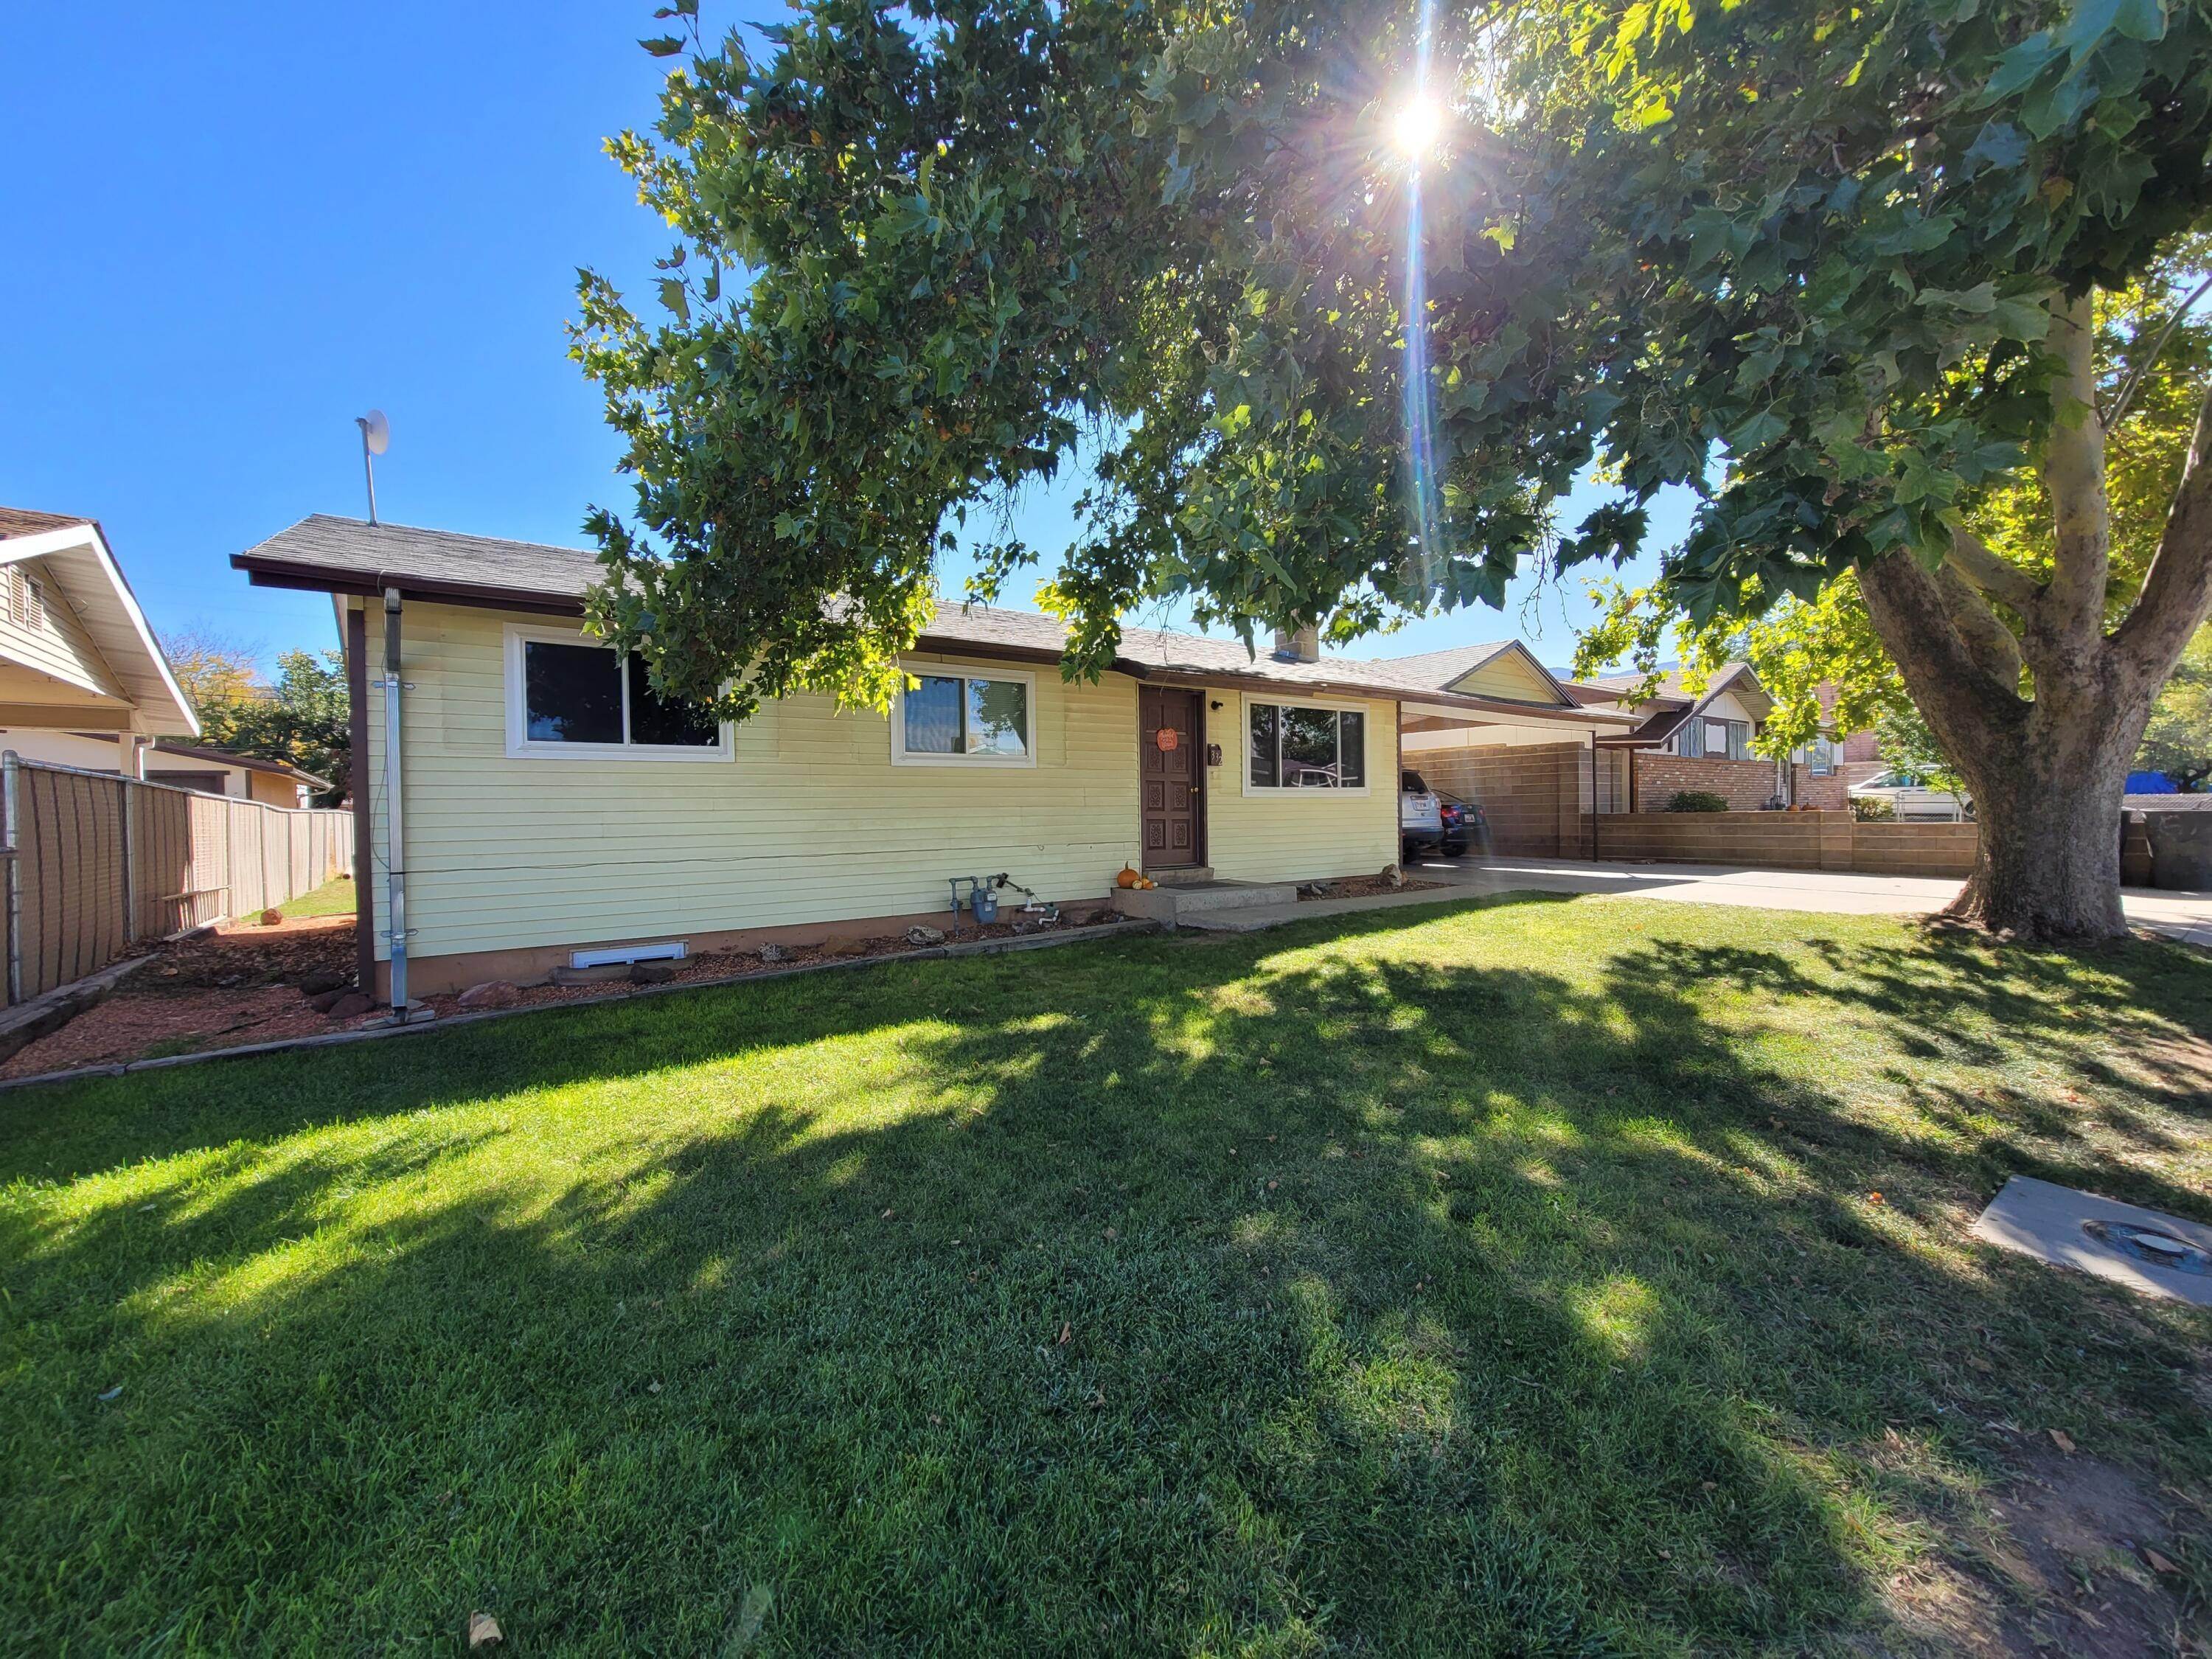 Multi-Family Homes for Sale at 332 800 Cedar City, Utah 84721 United States